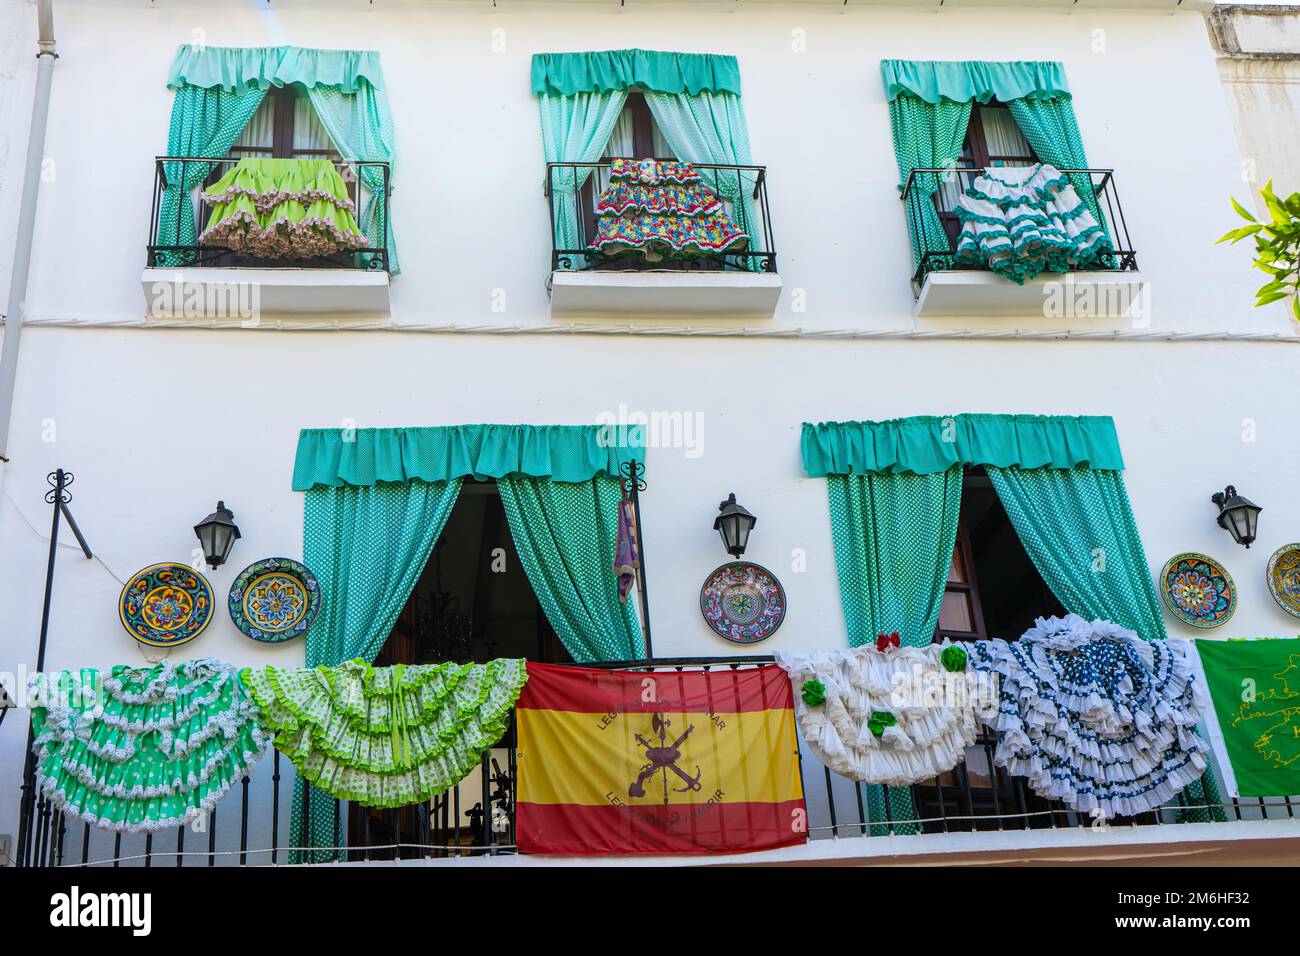 MARBELLA, SPANIEN - 11. SEPTEMBER 2022: Traditionelle Kostüme auf dem Balkon in Marbella, Spanien am 11. September 2022 Stockfoto